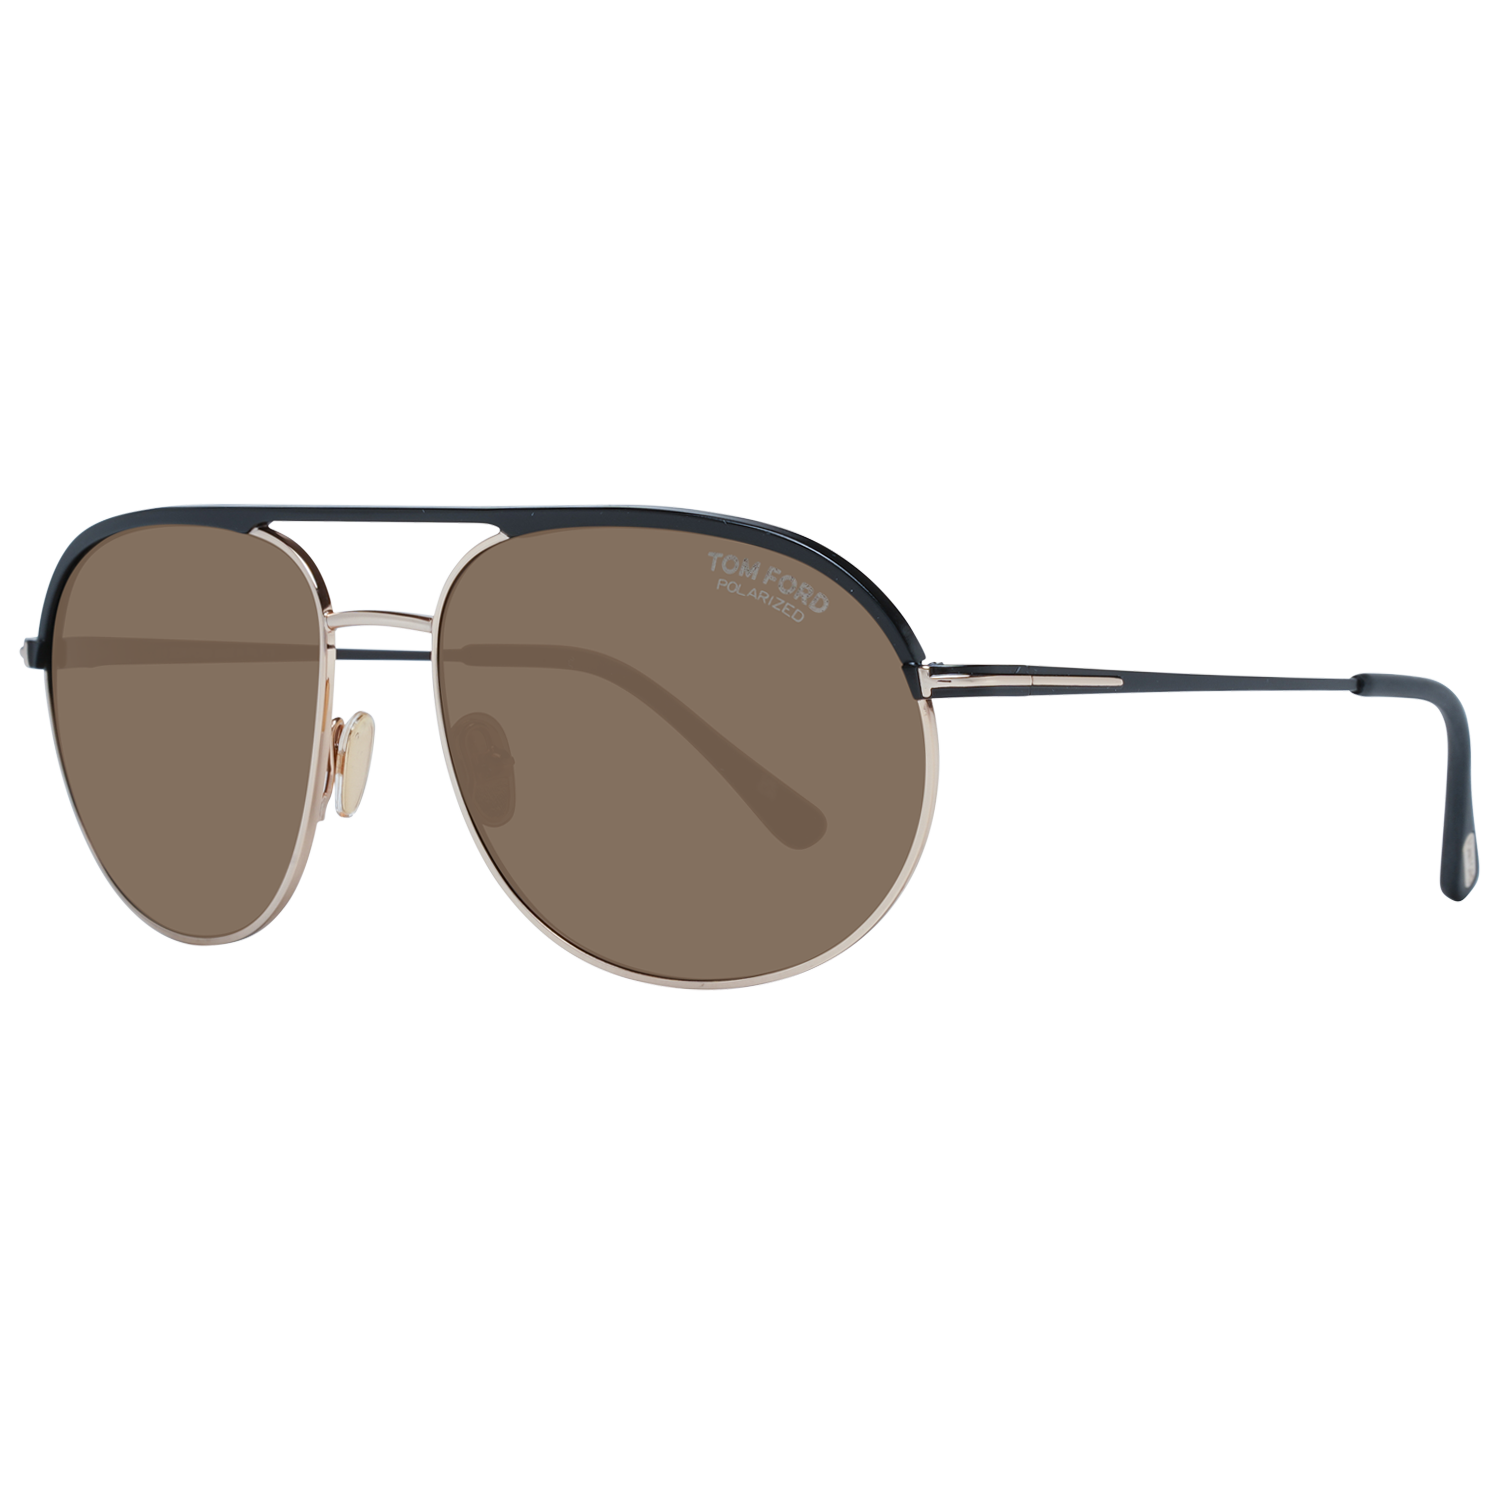 Tom Ford Sunglasses Tom Ford Sunglasses FT0772 02H 59mm Gio Eyeglasses Eyewear UK USA Australia 